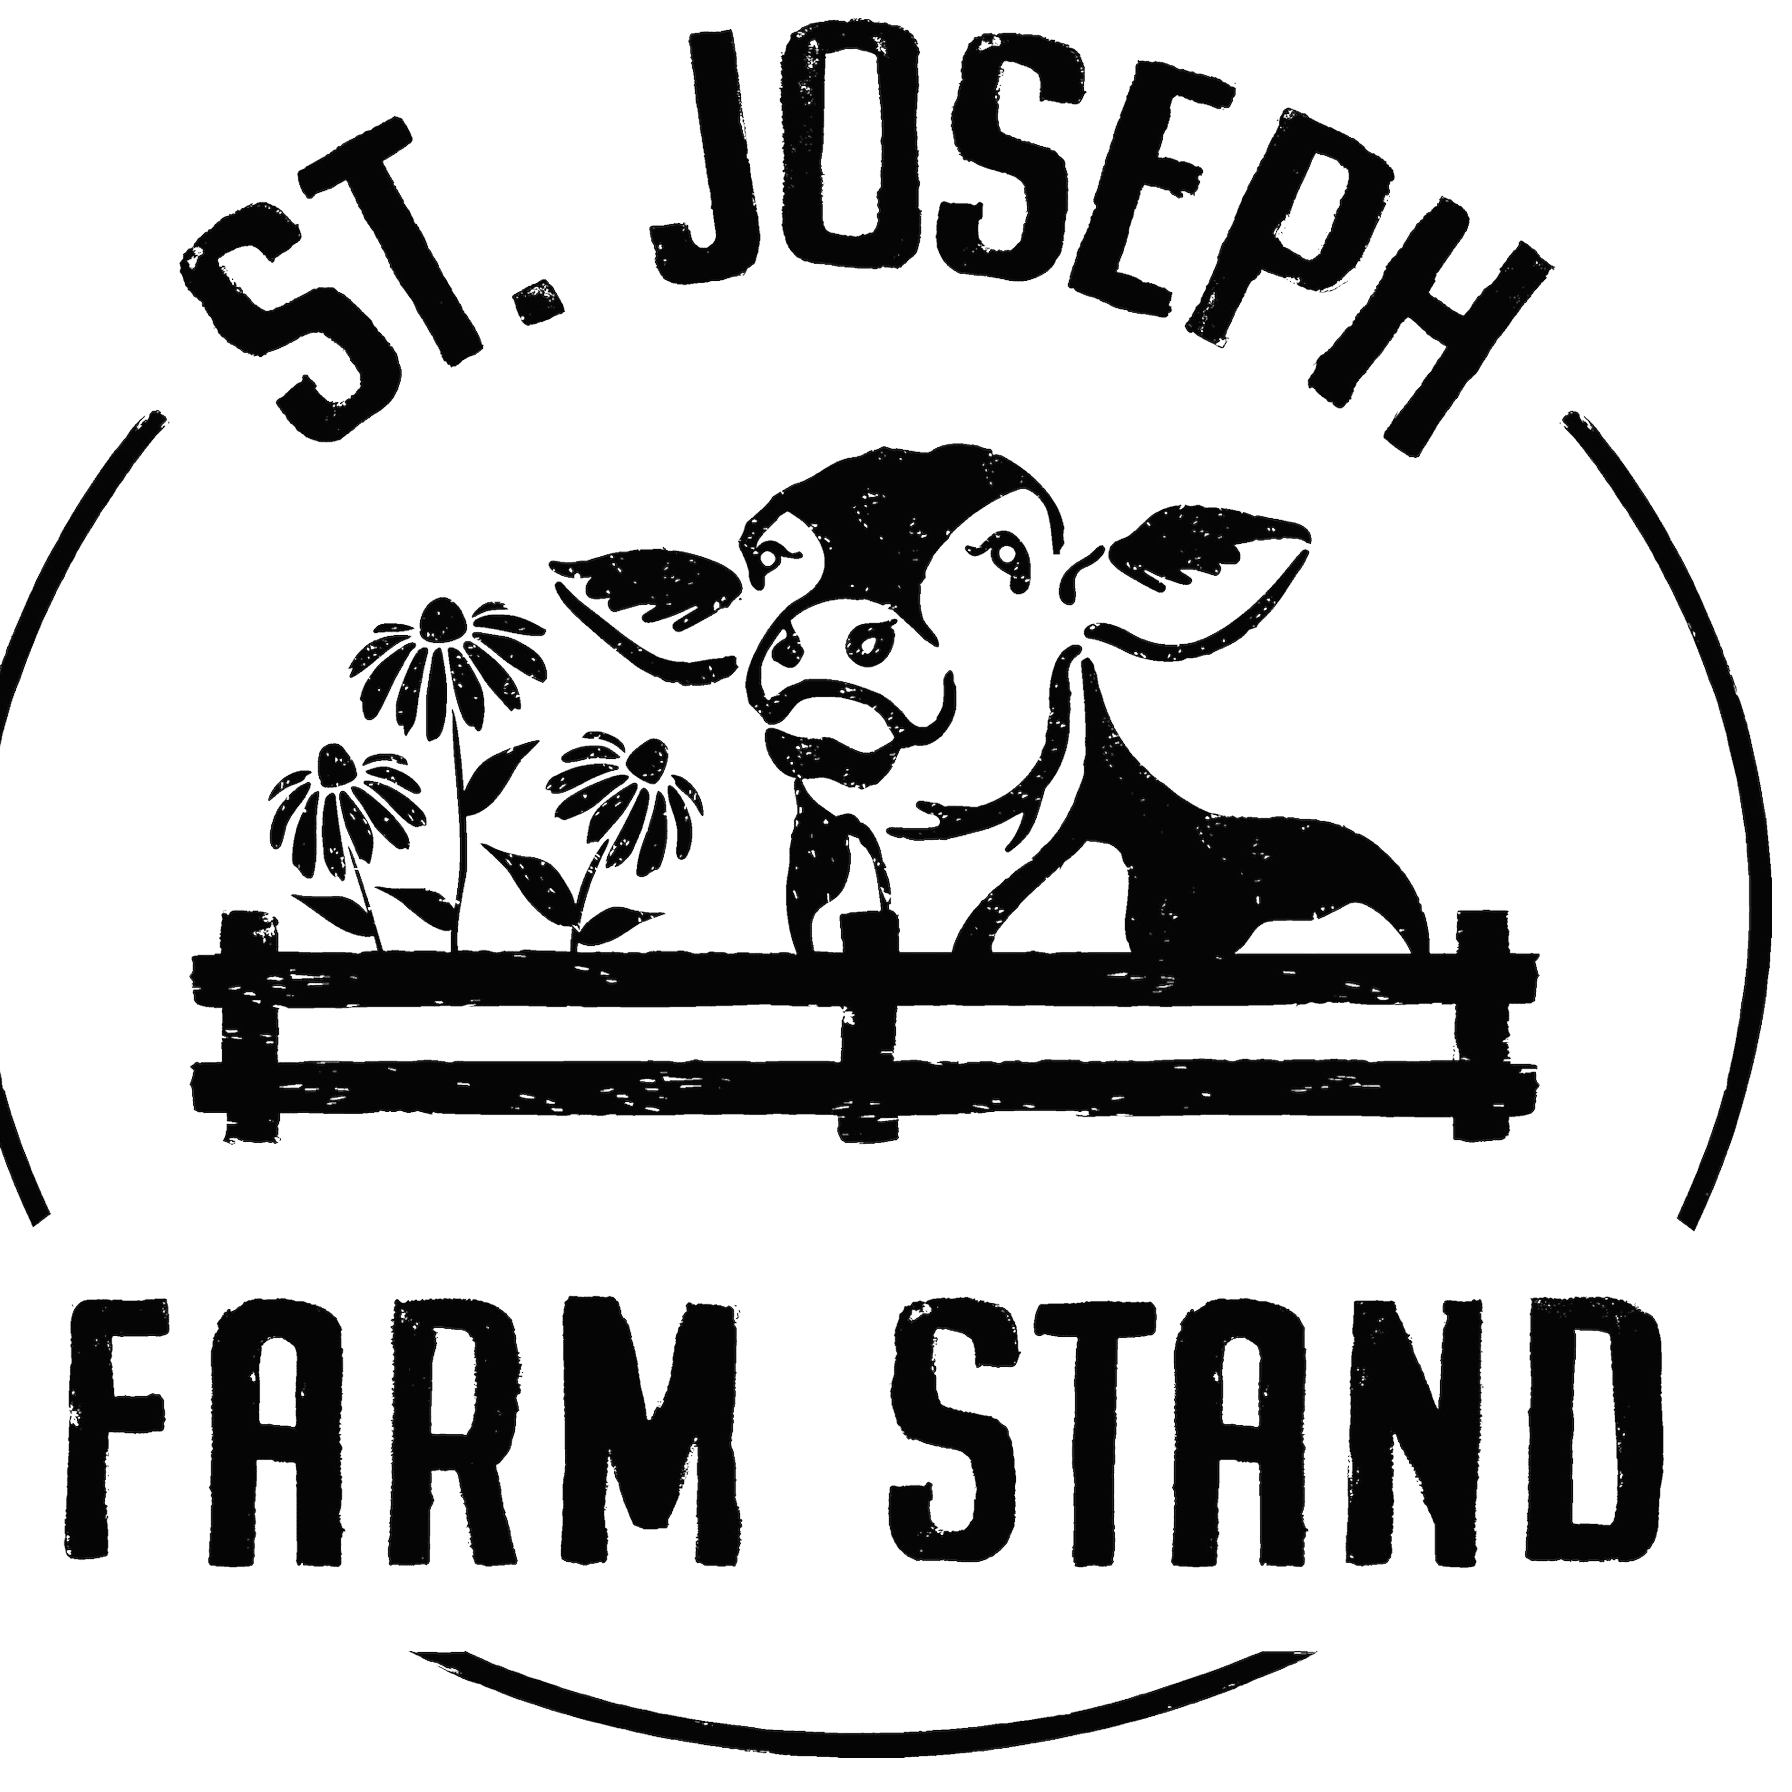 St. Joseph Farm Stand